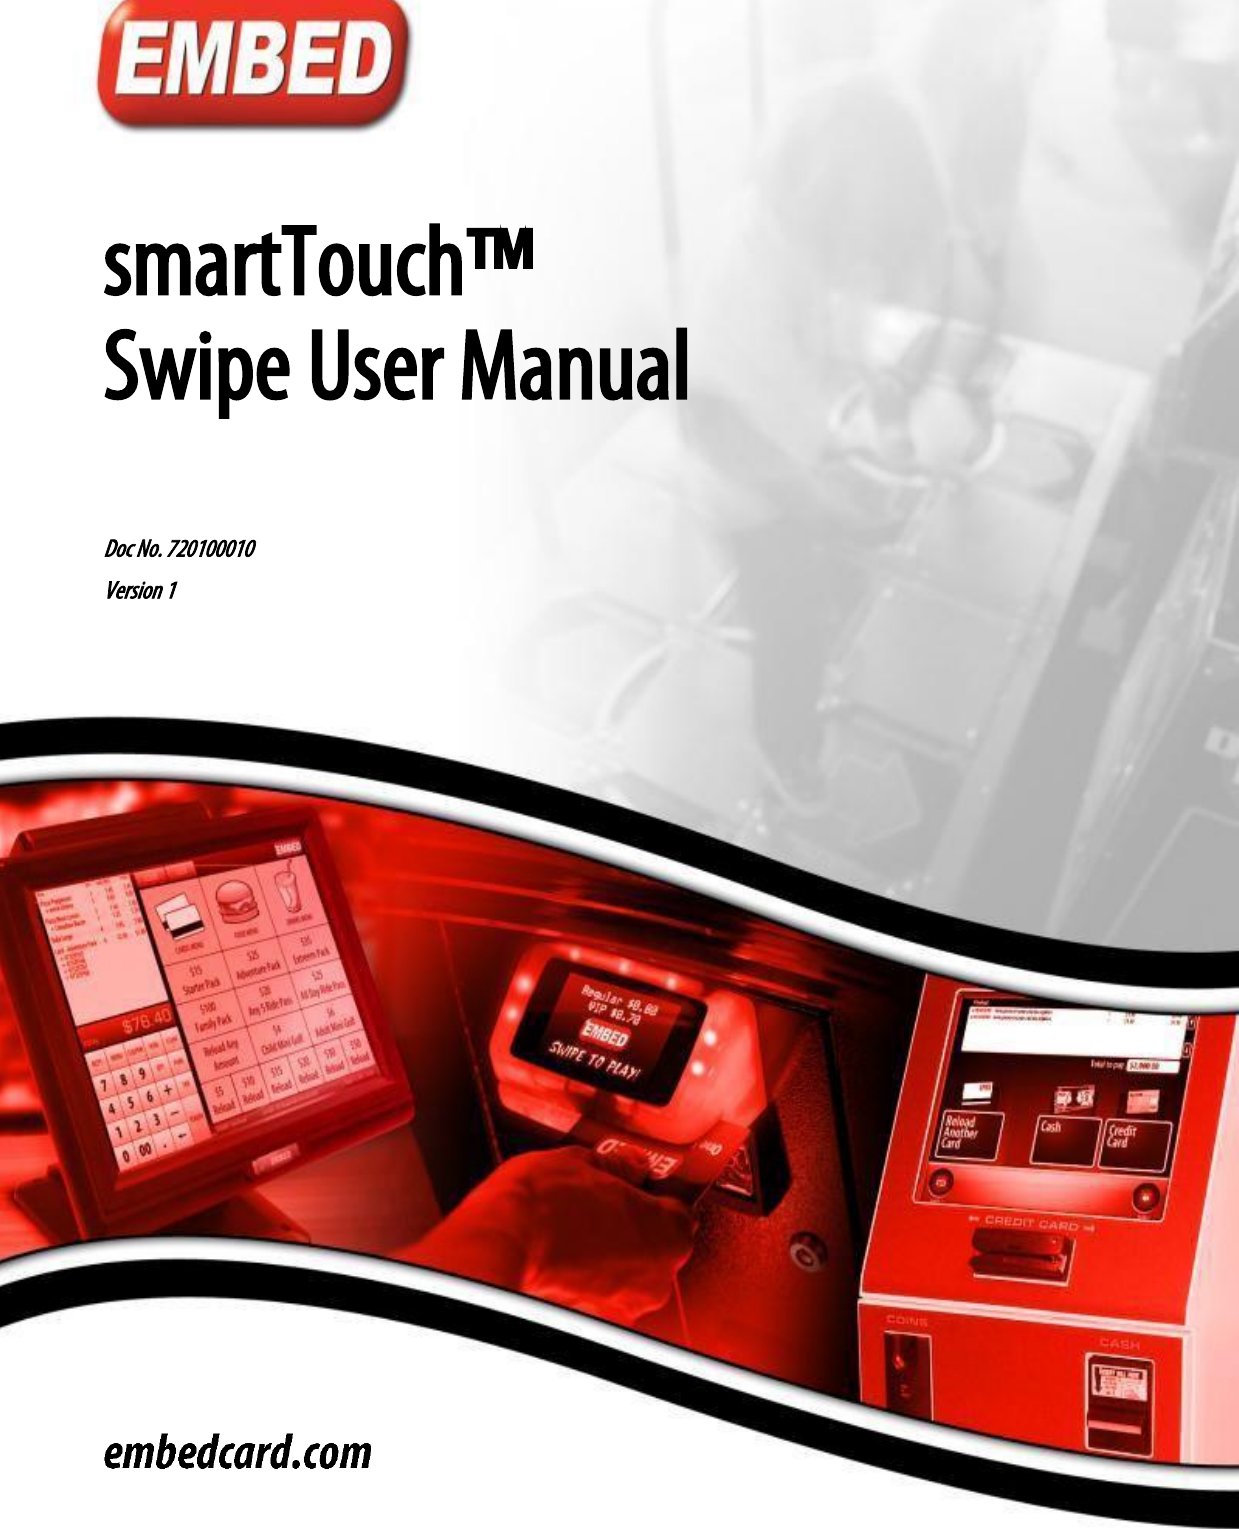               smartTouch™ Swipe User Manual   Doc No. 720100010 Version 1  